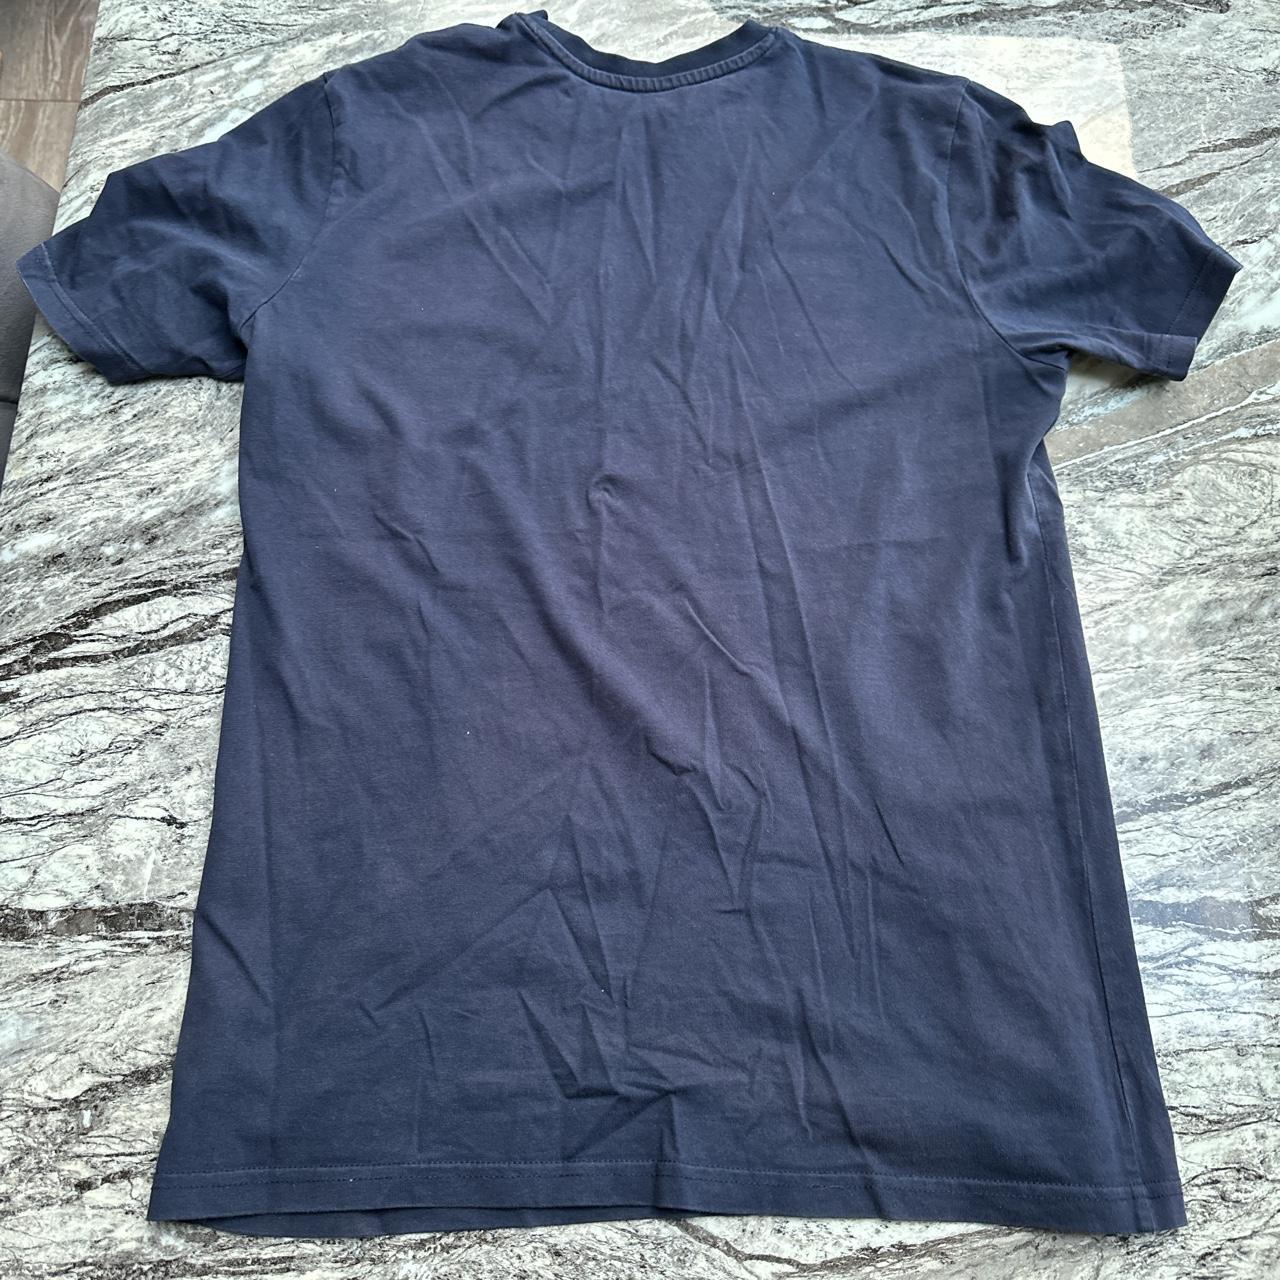 Yelir world navy T-shirt Size medium Worn No rips... - Depop